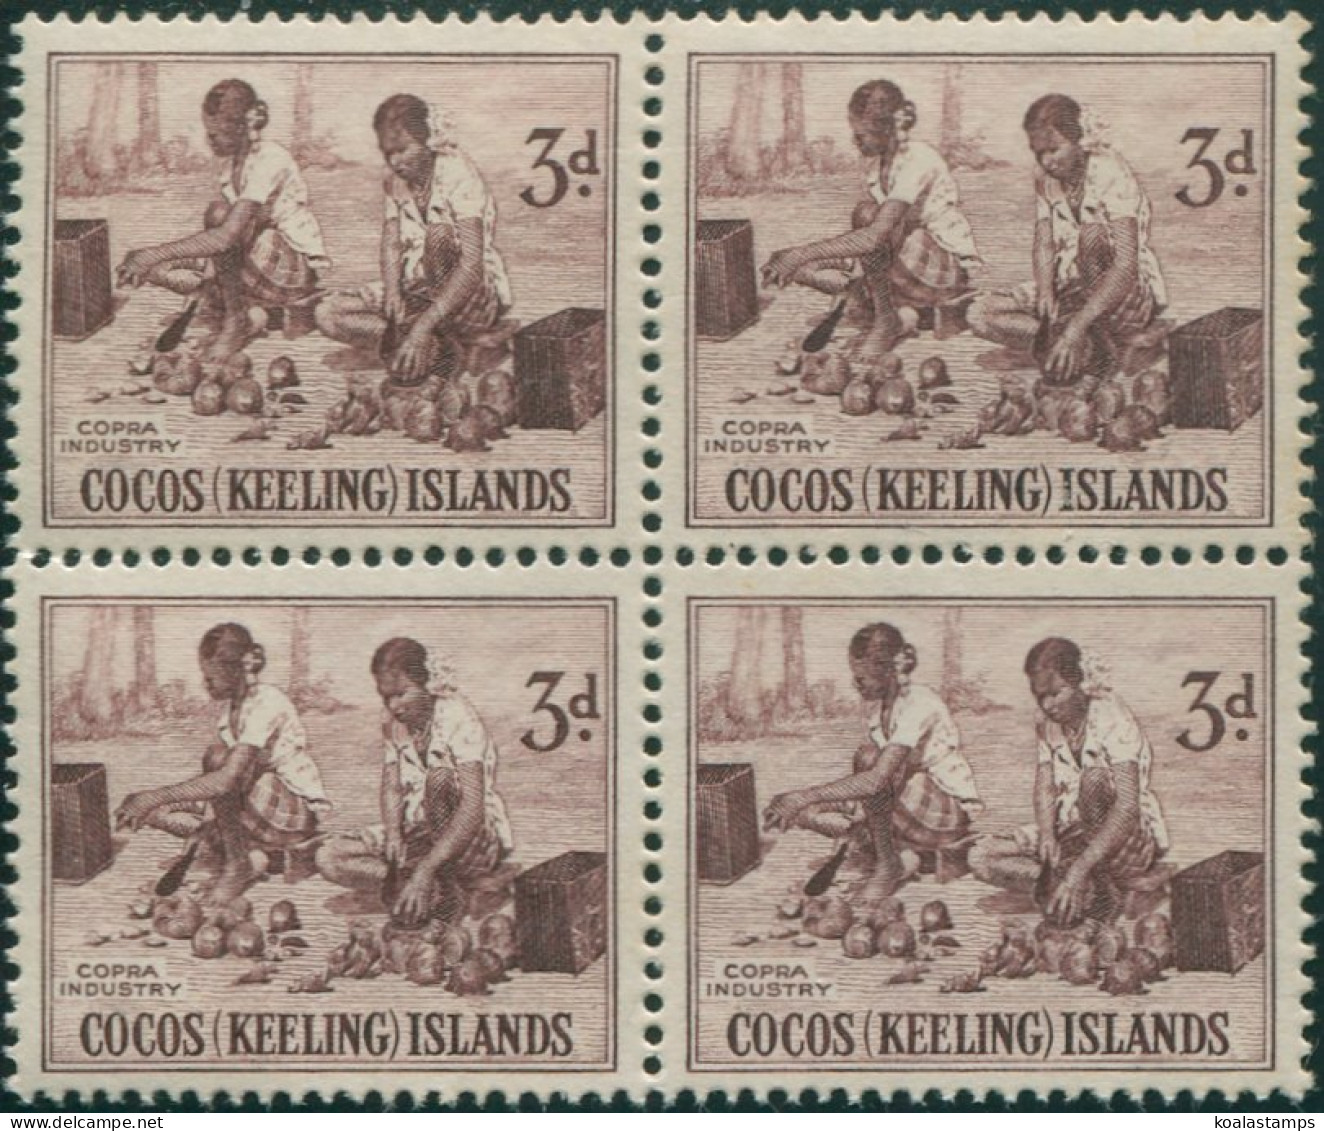 Cocos Islands 1963 SG1 3d Copra Industry Block MNH - Kokosinseln (Keeling Islands)